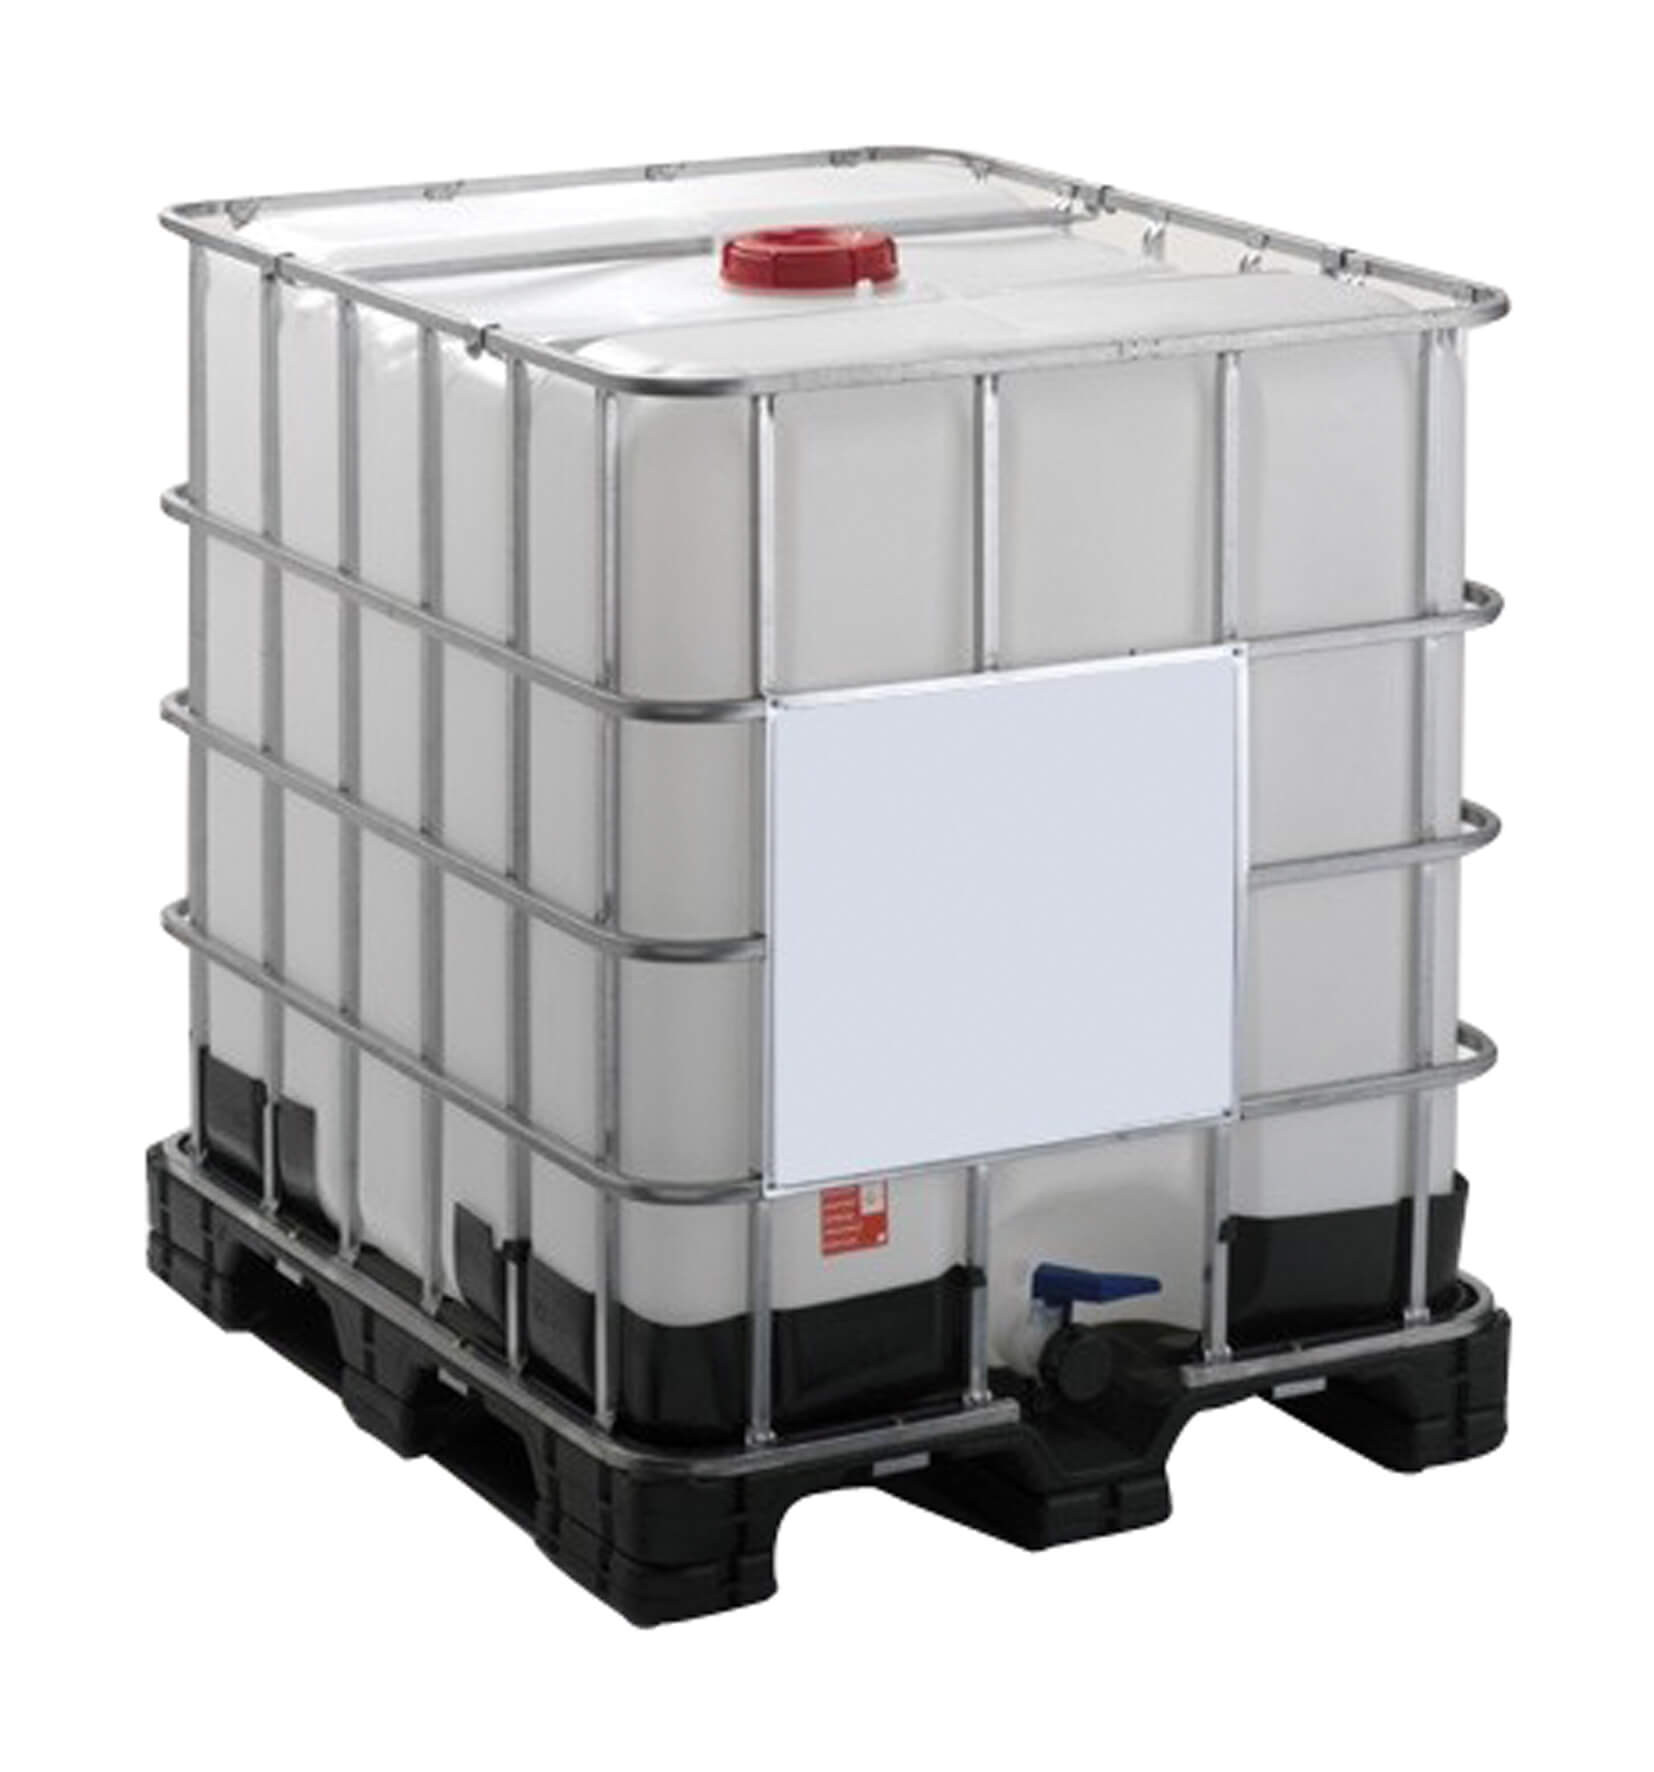 Misbruik springen vee 1000-Liter-Container from GRAF